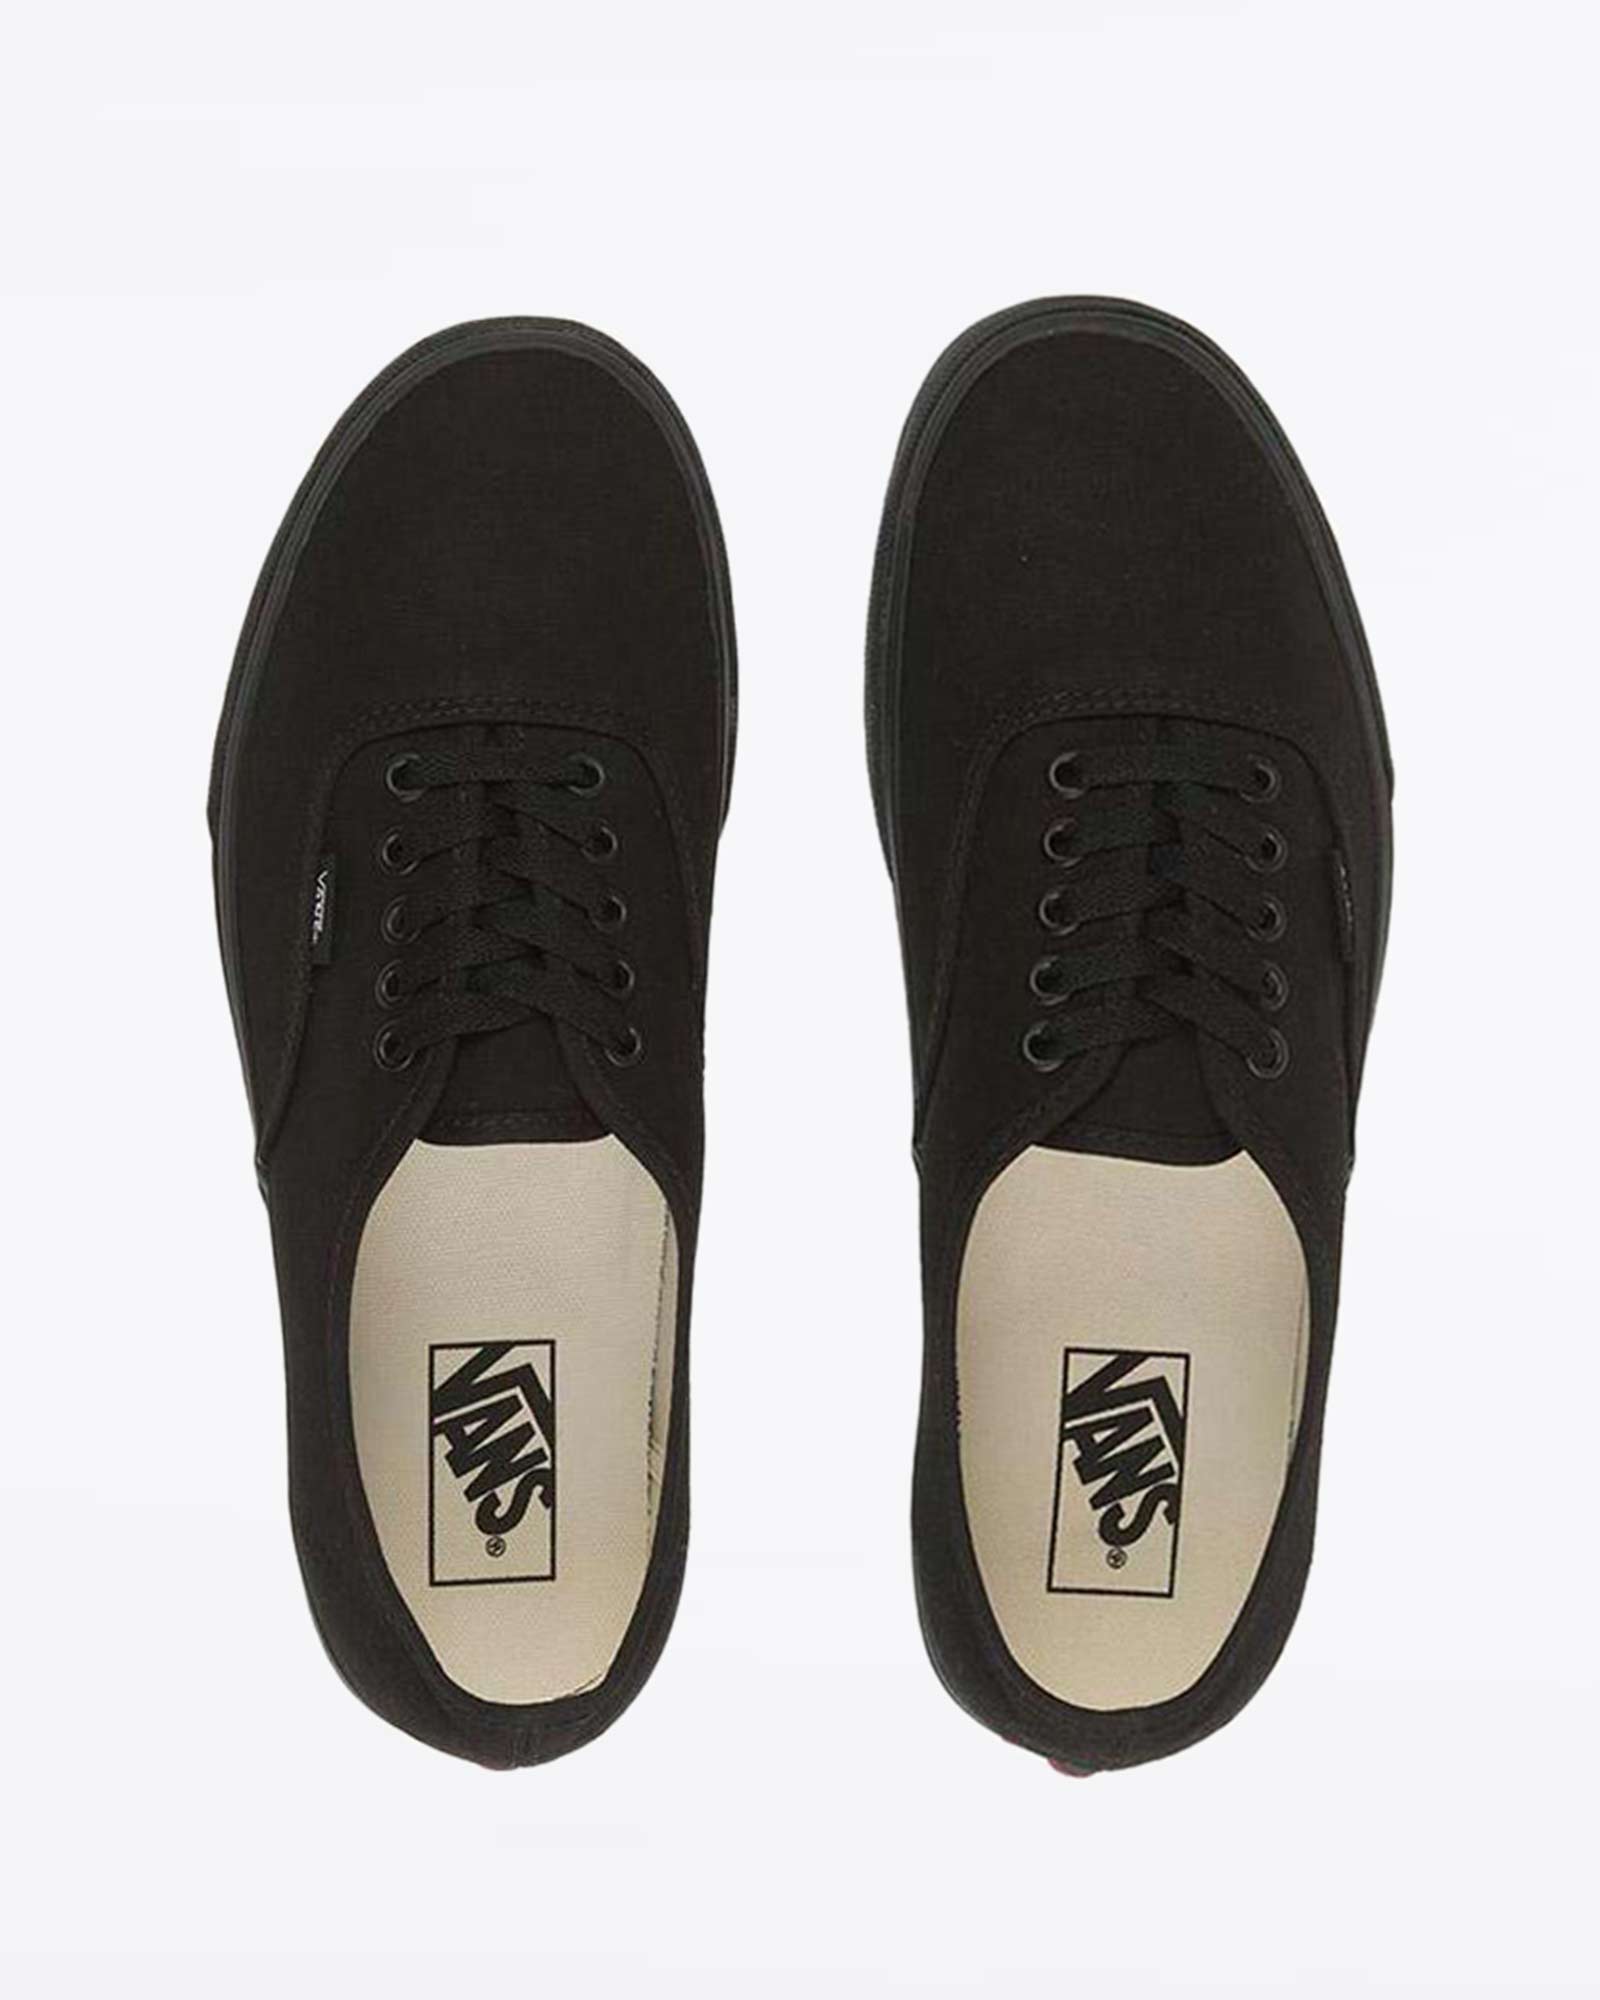 Vans Authentic Black Shoe | Ozmosis | Boots + Sneakers